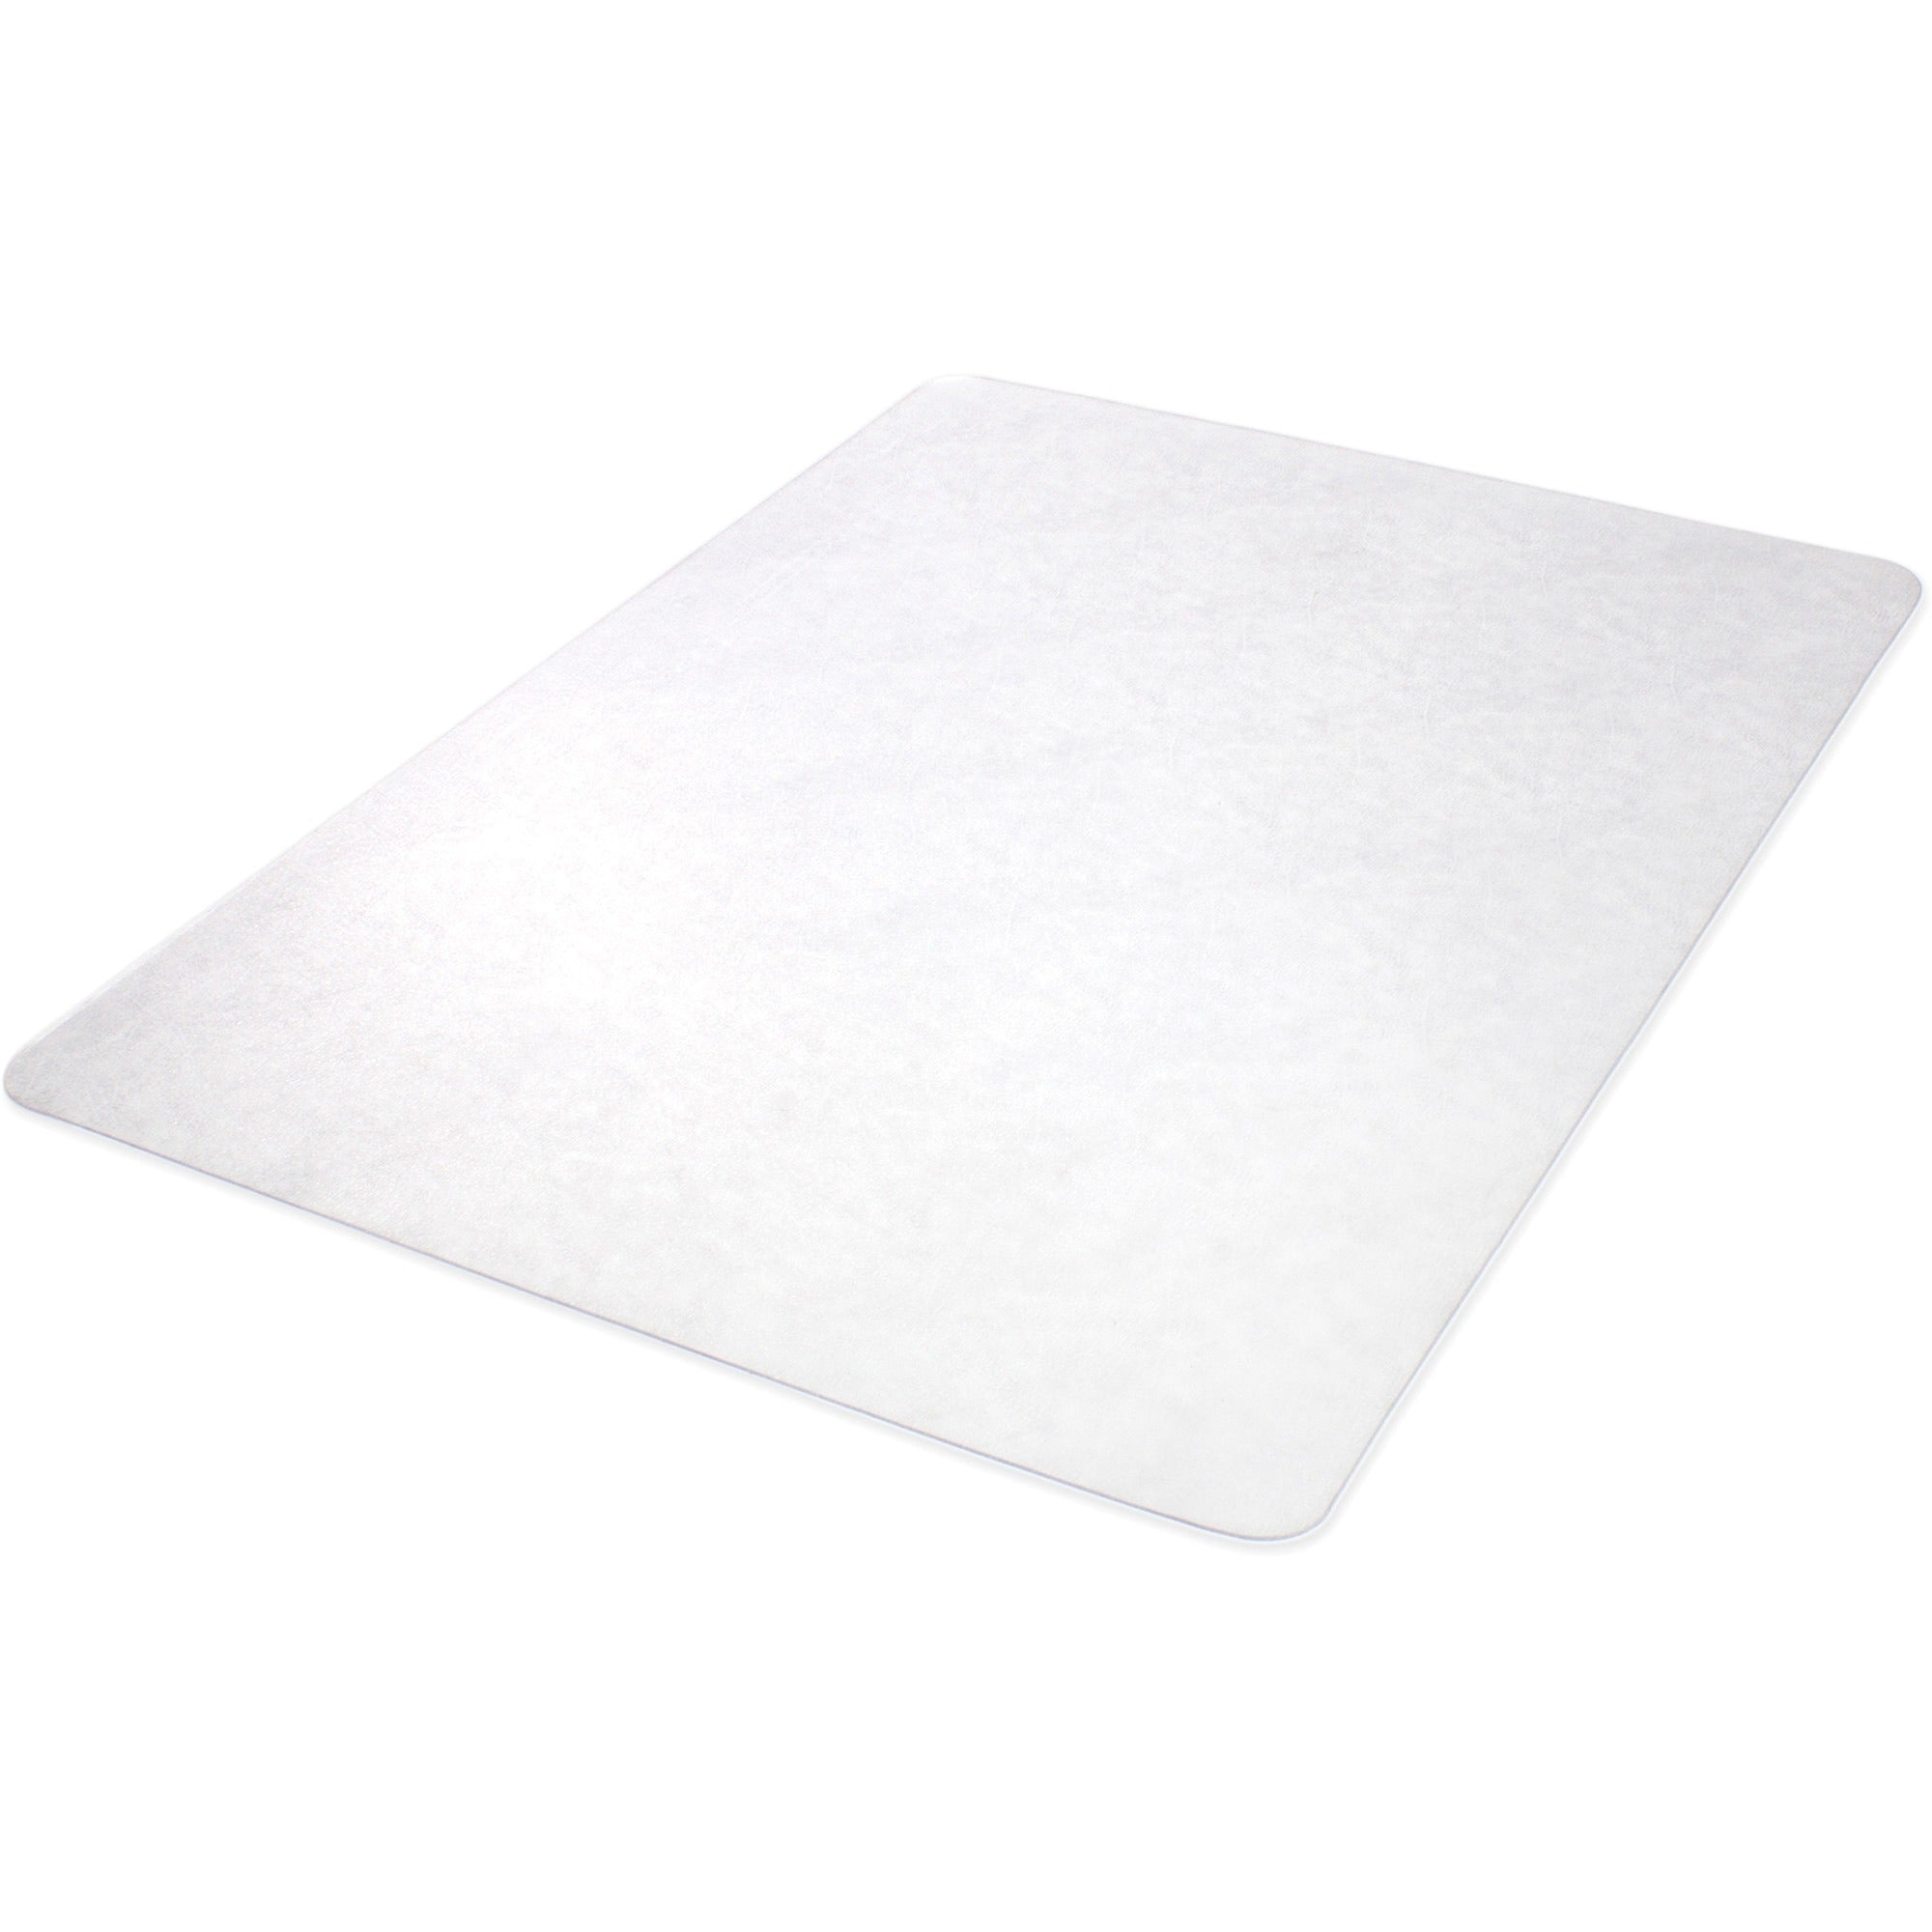 deflecto-duomat-multi-surface-chairmat-carpet-hard-floor-60-length-x-46-width-rectangular-classic-clear-1each_defcm23442fduo - 2